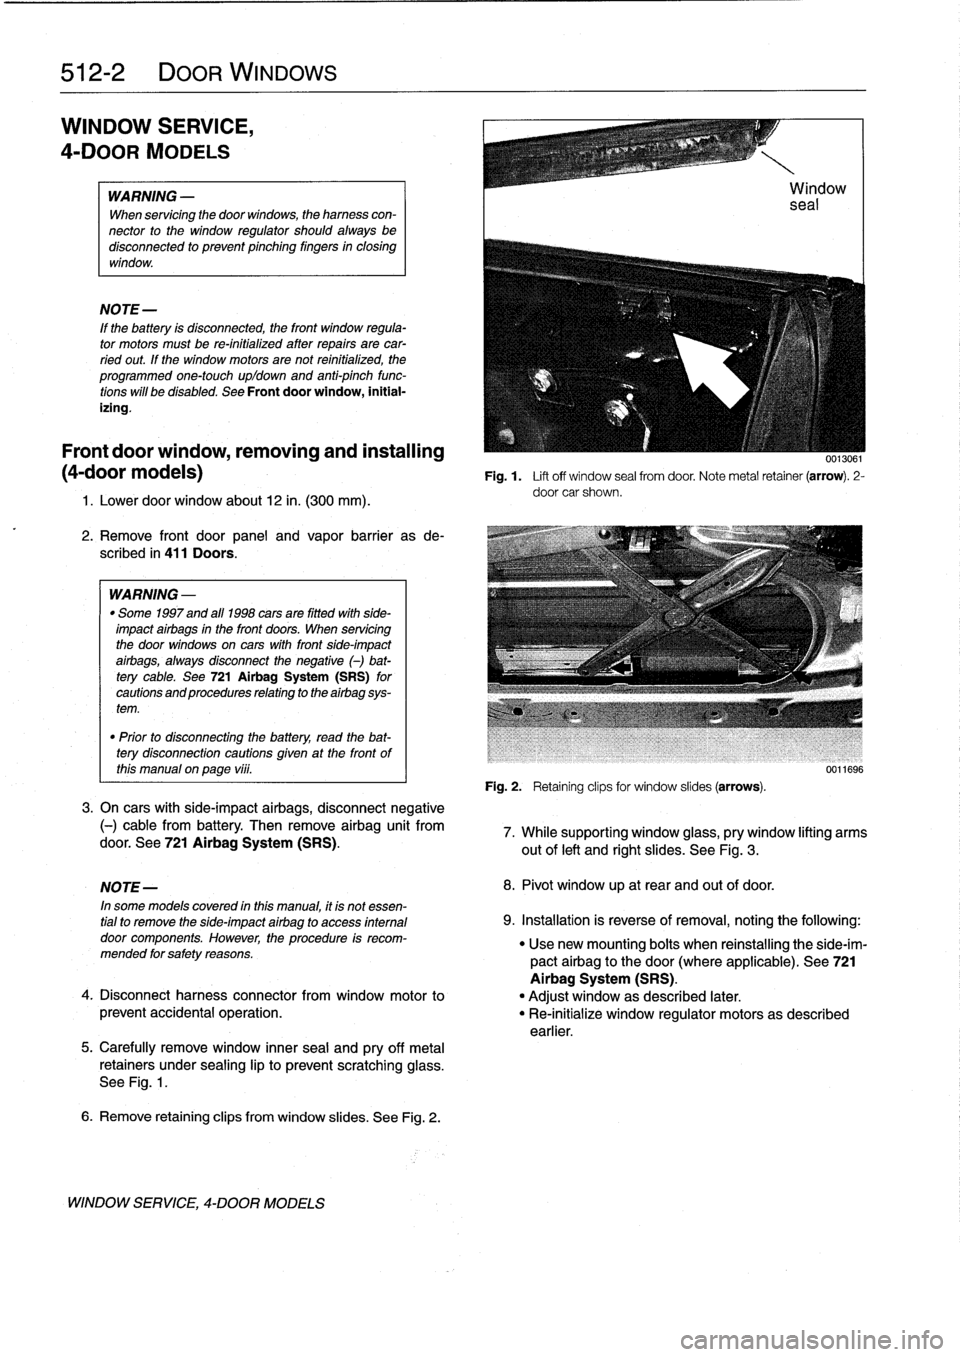 BMW 323i 1997 E36 Workshop Manual 
512-2

	

DOOR
WINDOWS

WINDOW
SERVICE,

4-DOOR
MODELS

WARNING
-

When
servicing
the
door
wíndows,
theharness
con-
nector
to
the
window
regulator
shouldalways
be
disconnected
to
prevent
pinching
fi